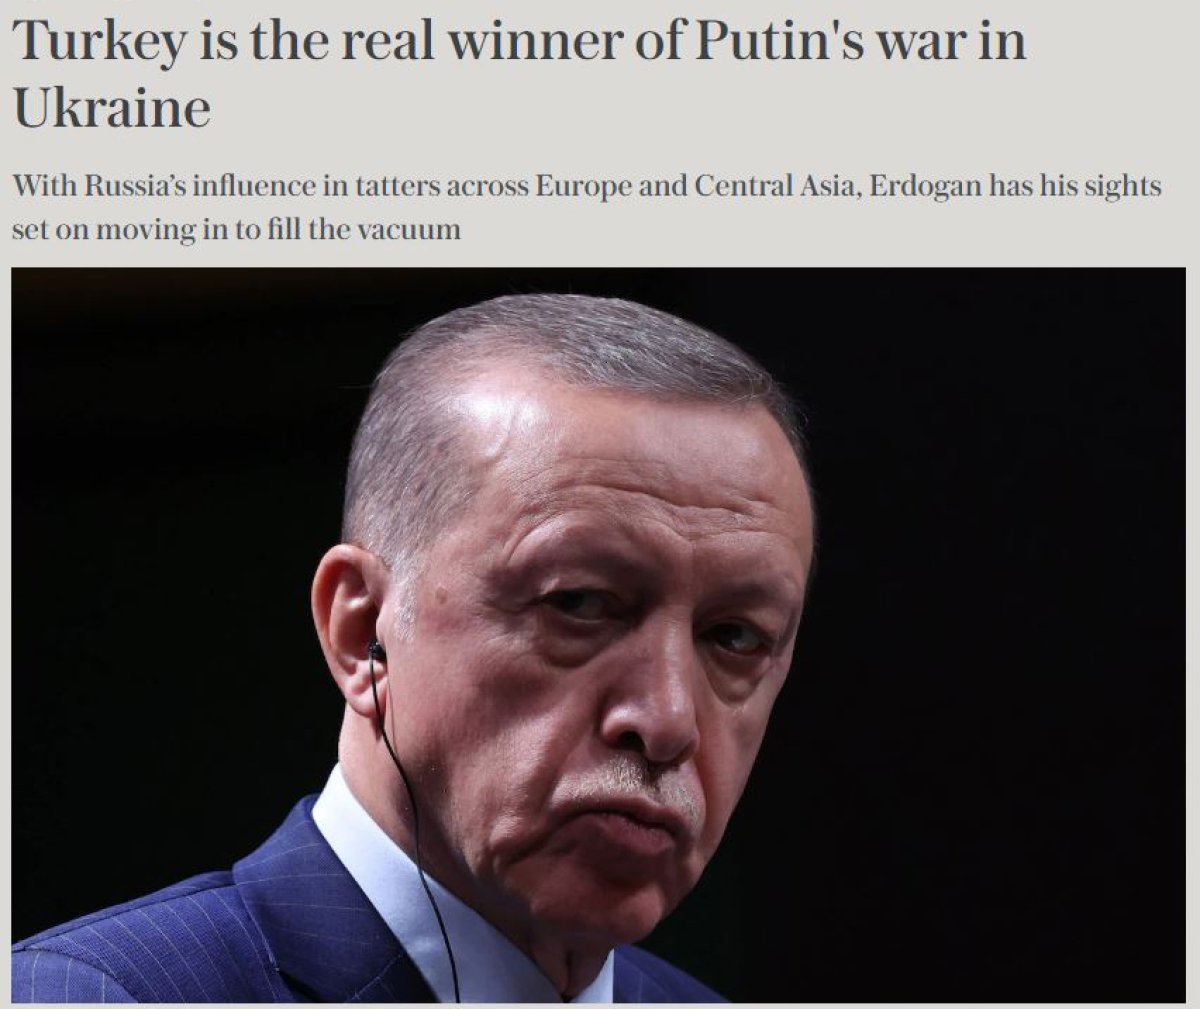 Telegraph: Turkey #2, the real winner of the war in Ukraine